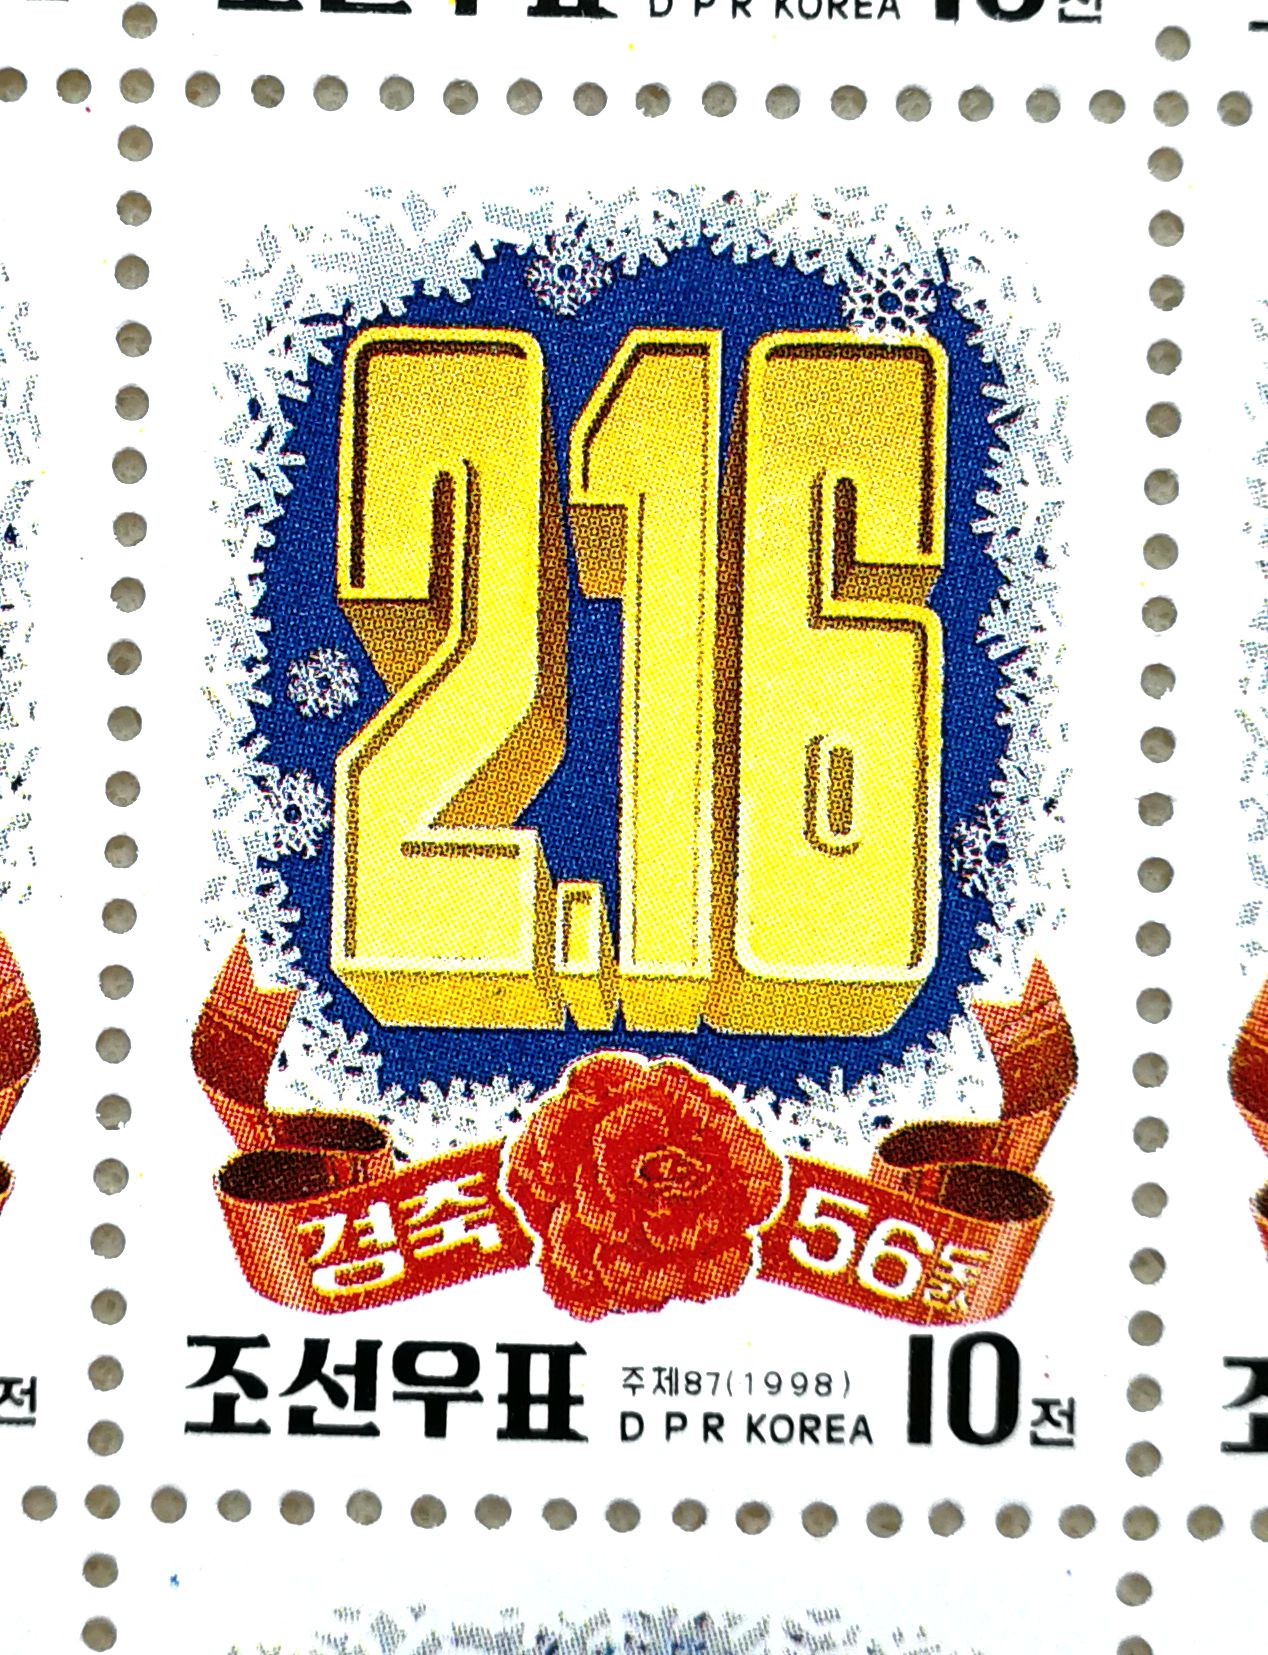 L4496, Korea "Birthday of Kim Jong Il", Full Sheet of 78 Pcs Stamps, 1998